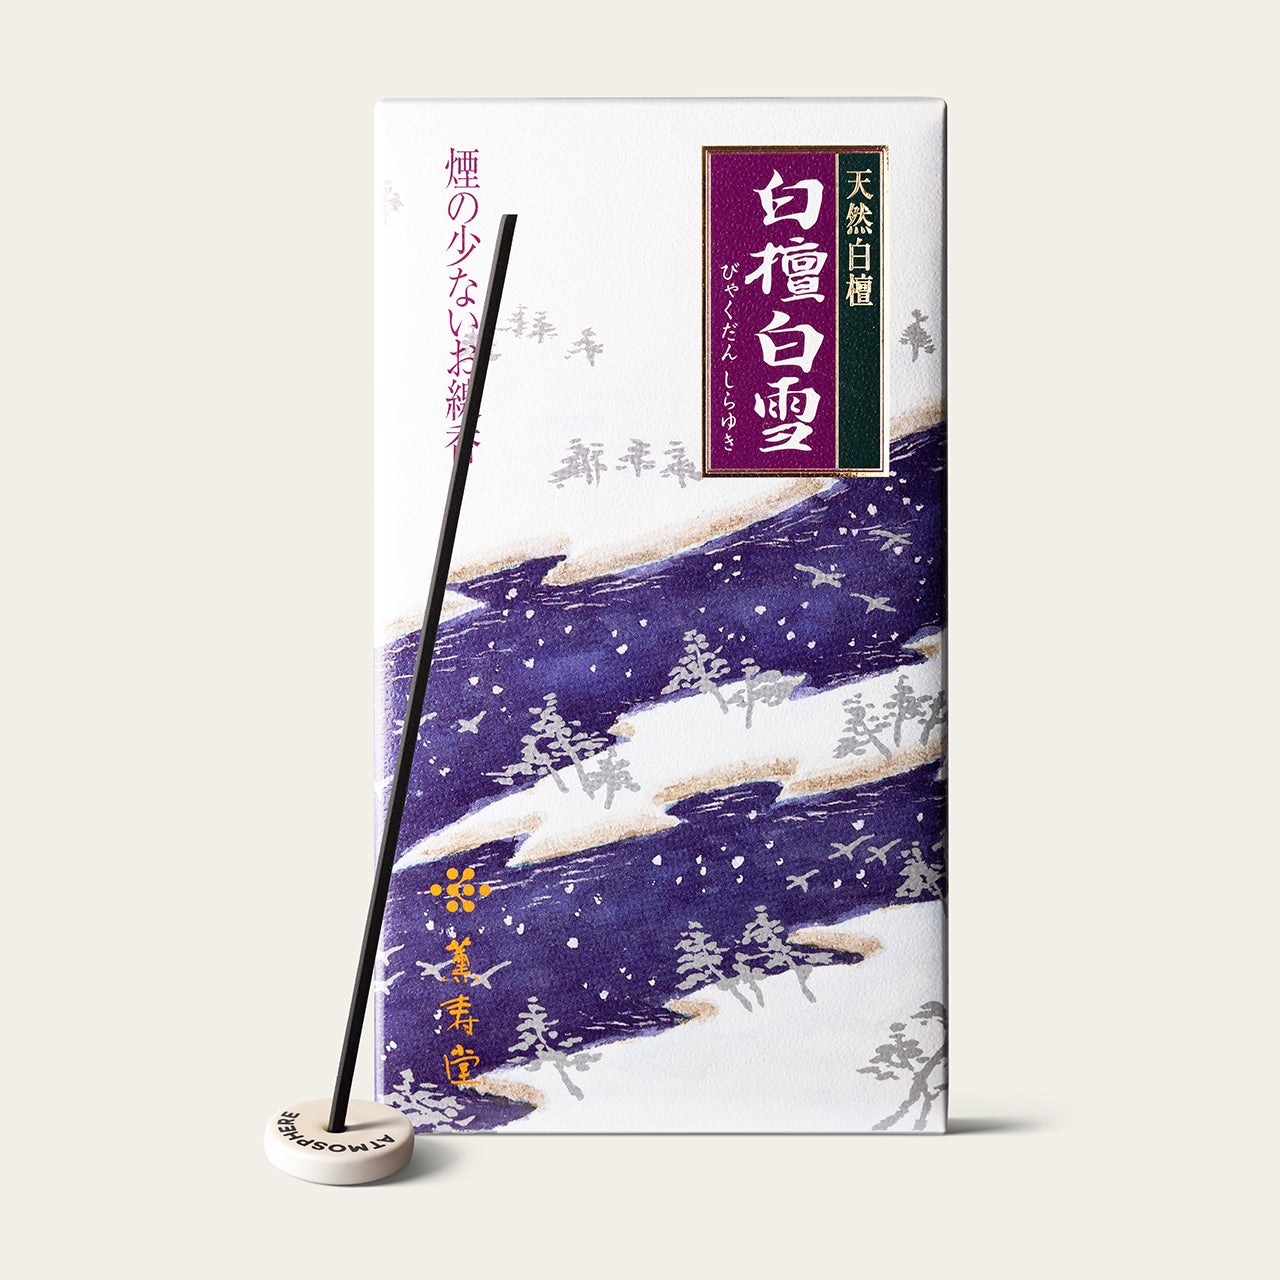 Kunjudo White Snow Sandalwood Byakudan Shirayuki Japanese incense sticks (220 sticks) with Atmosphere ceramic incense holder